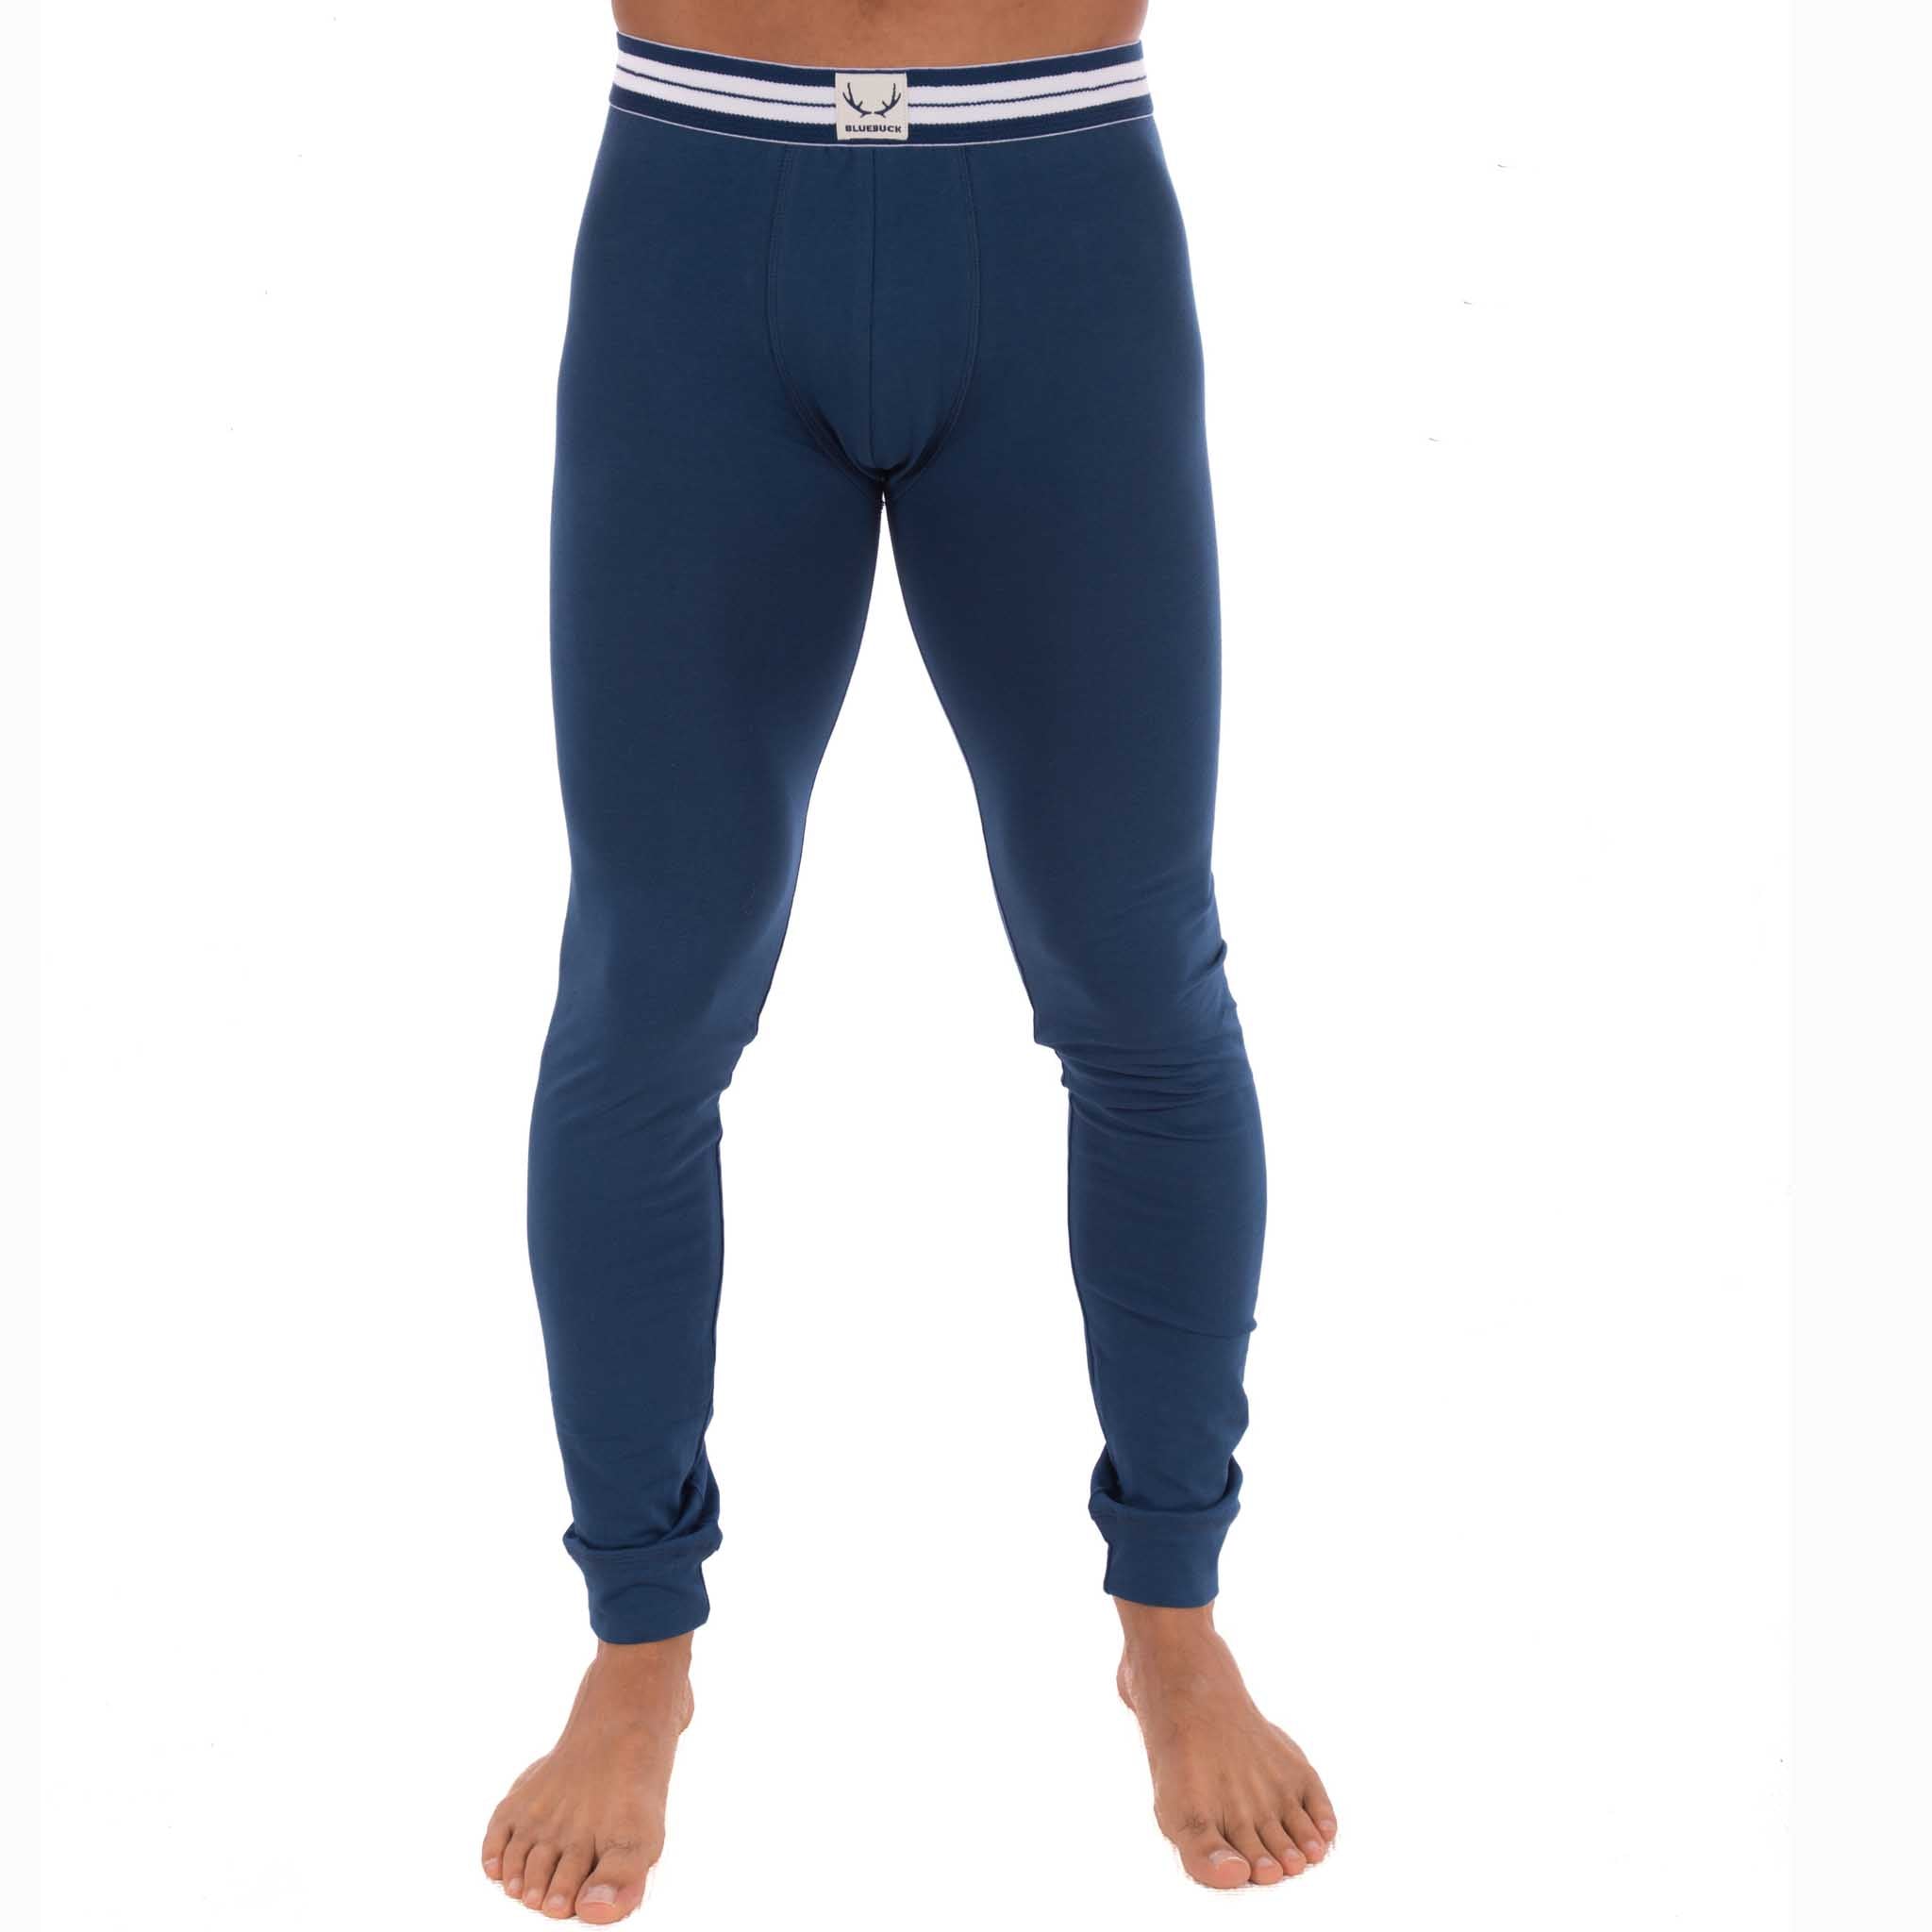 Navy blue organic cotton leggings from Bluebuck